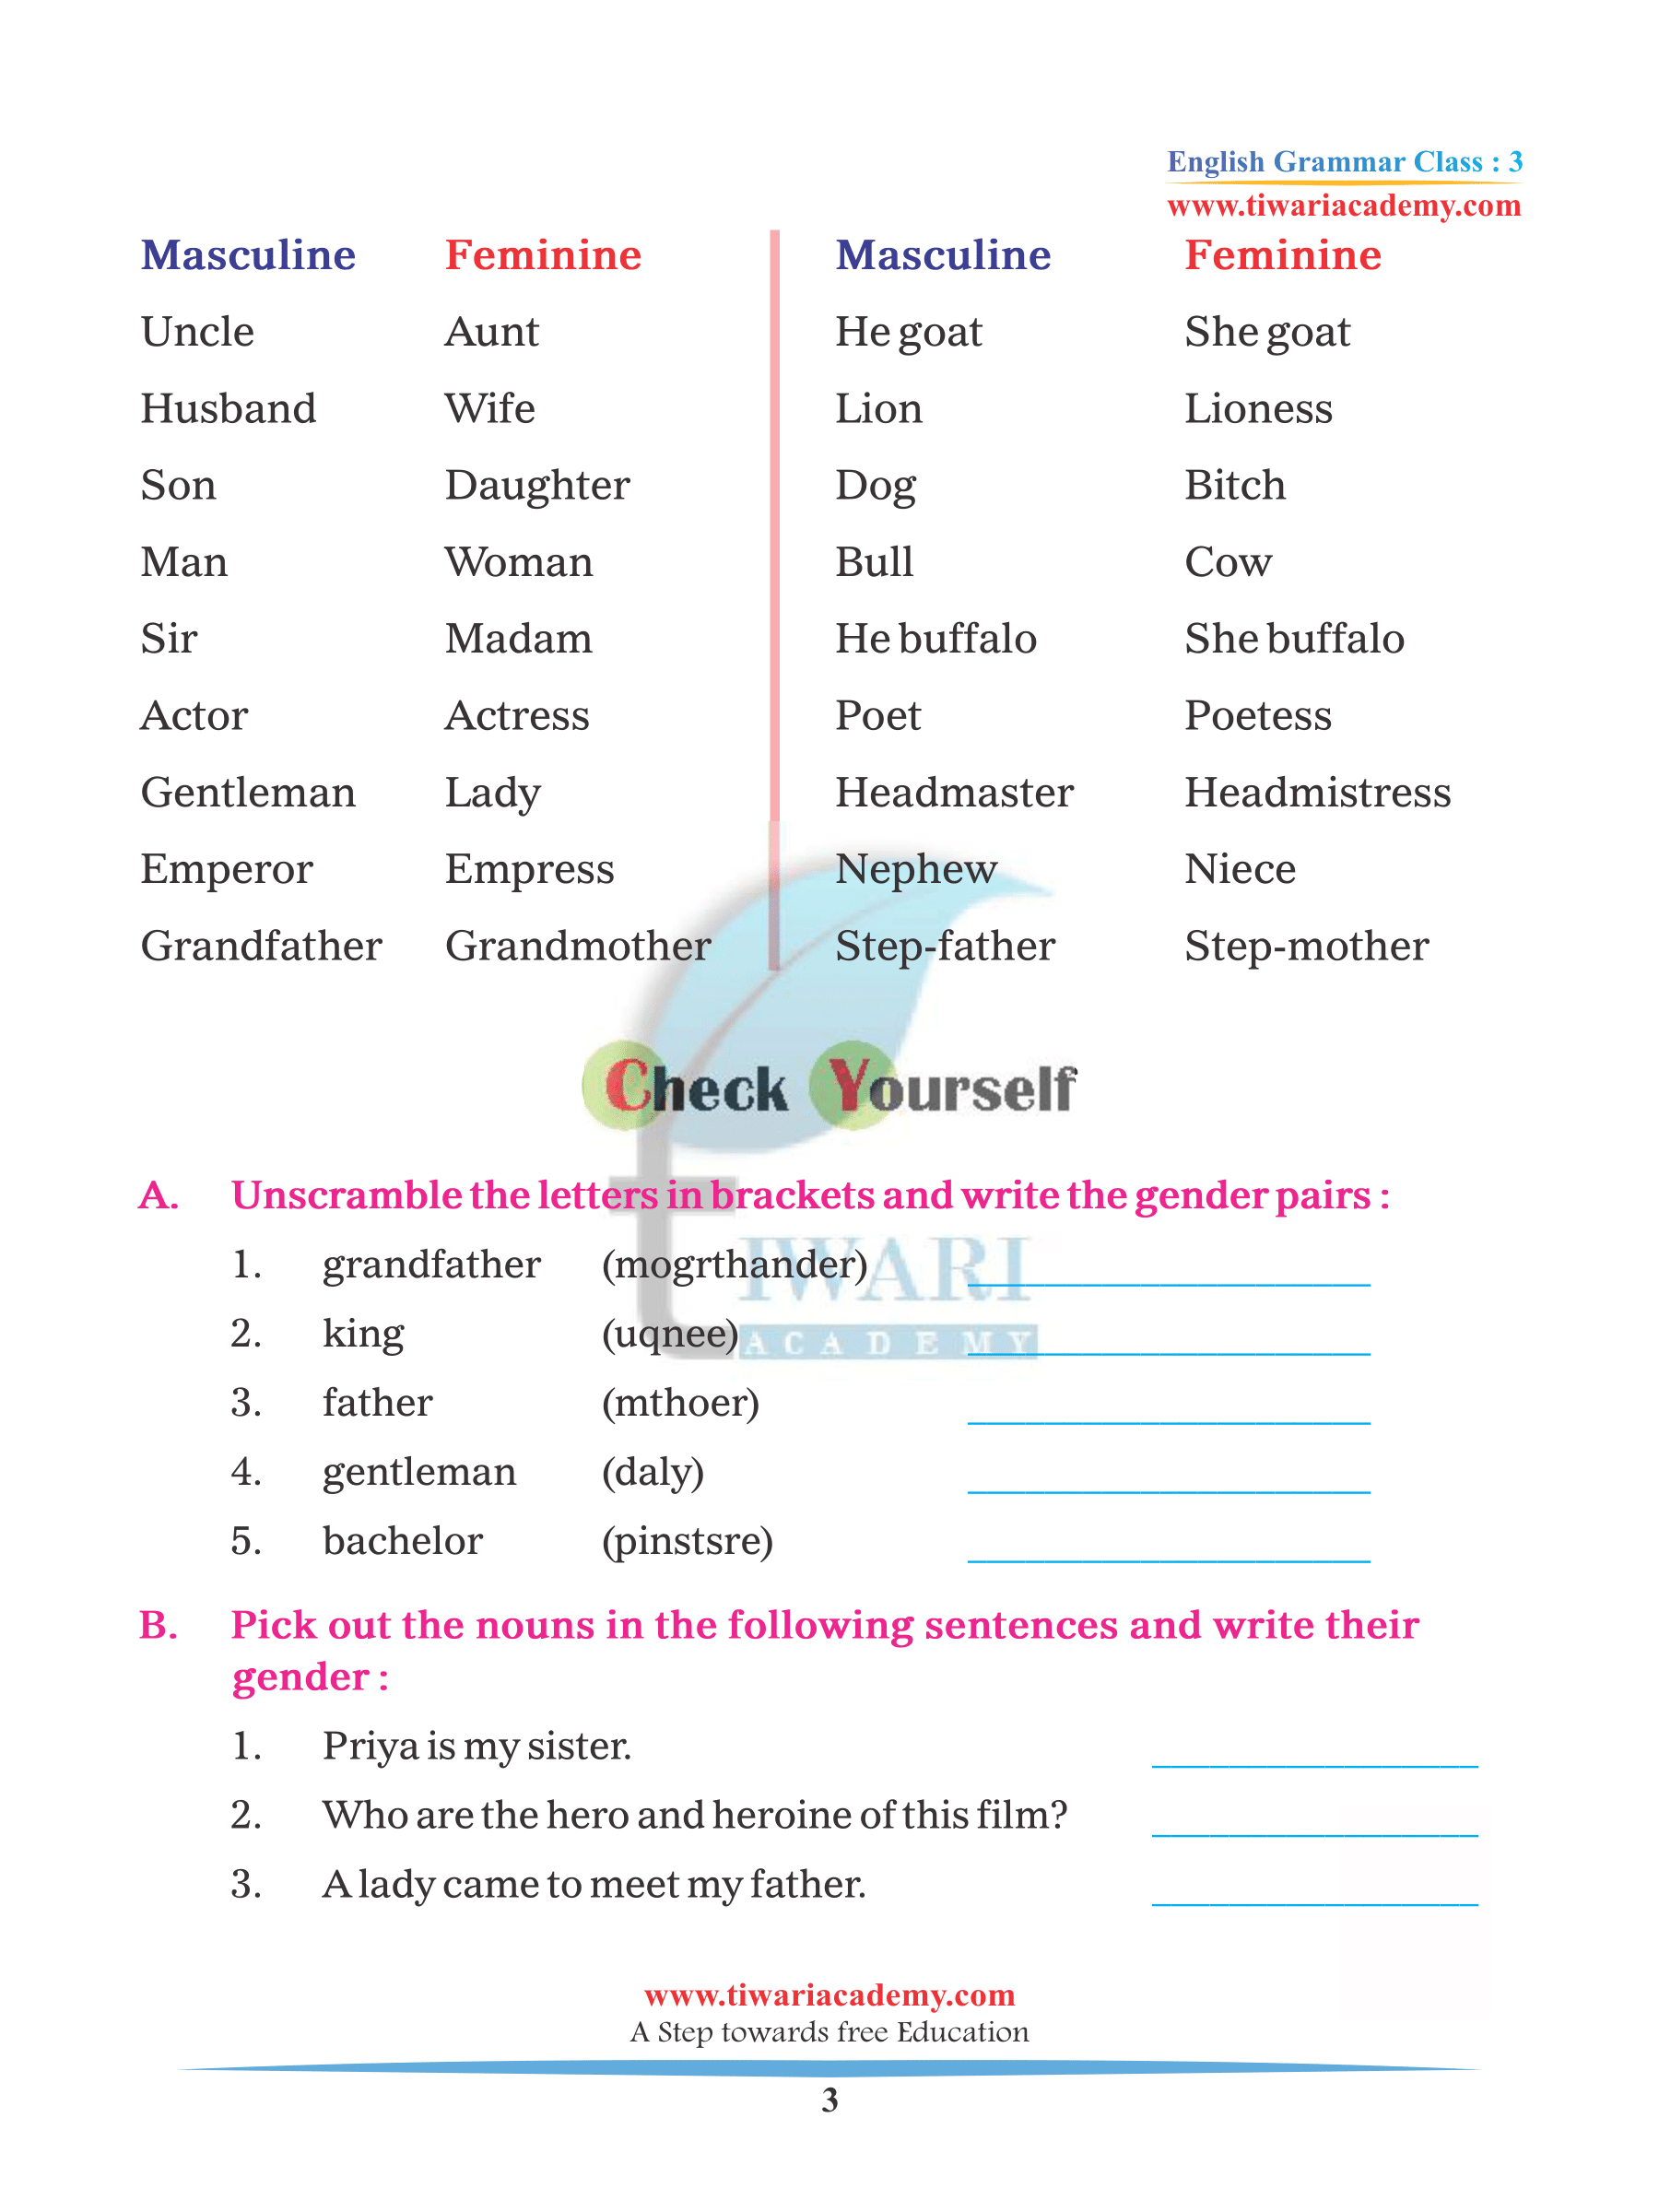 masculine-and-feminine-nouns